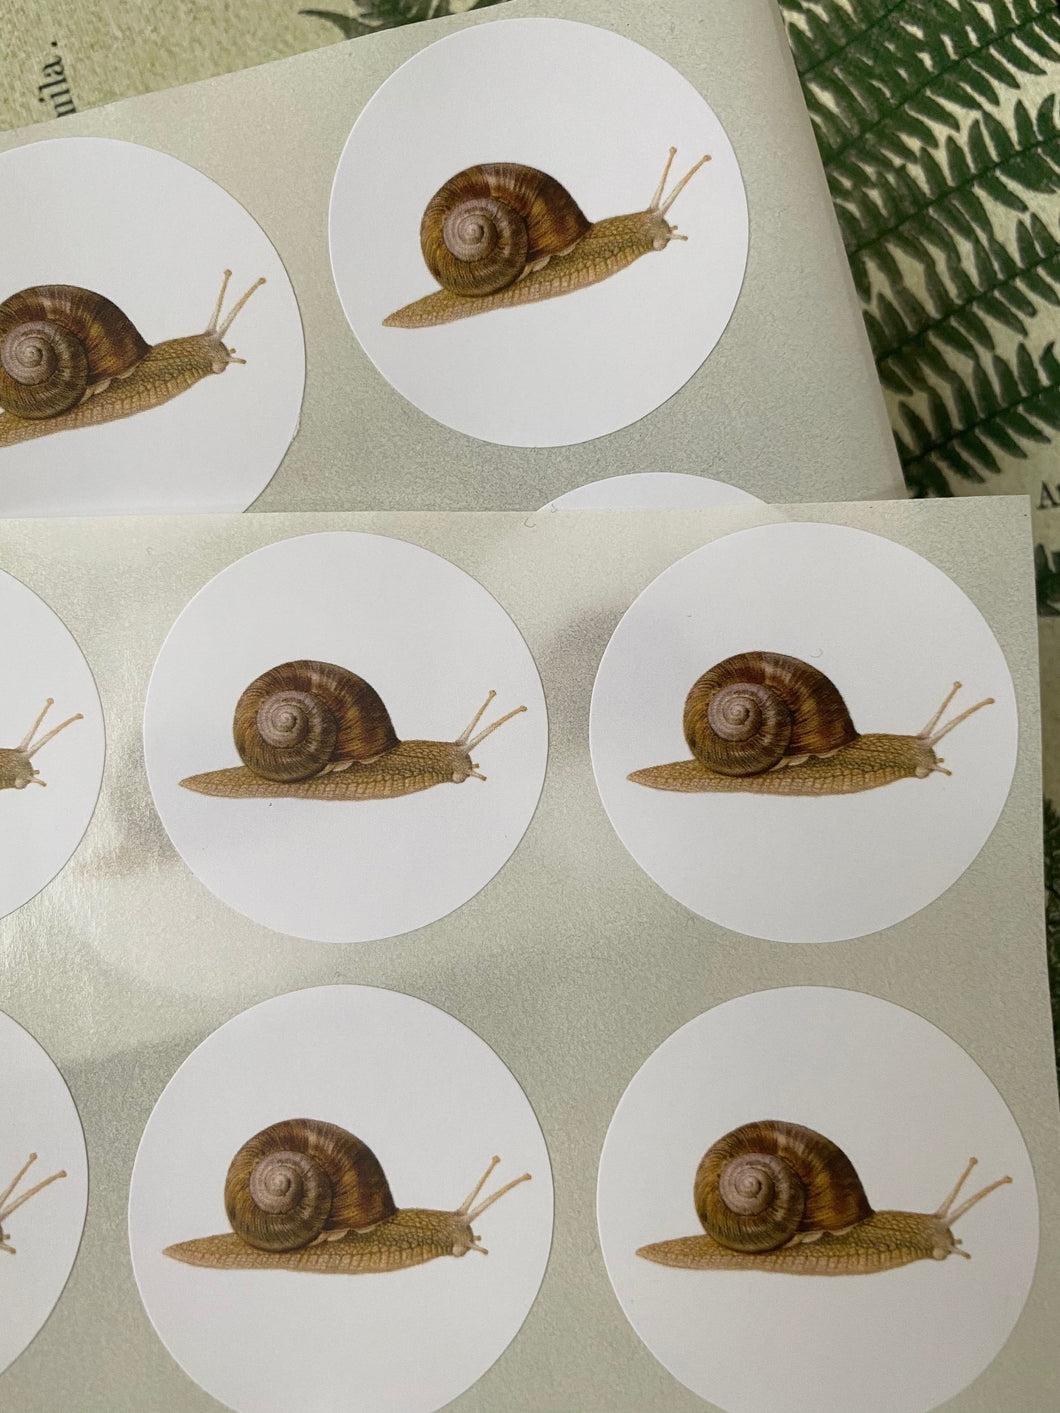 Snail round stickers